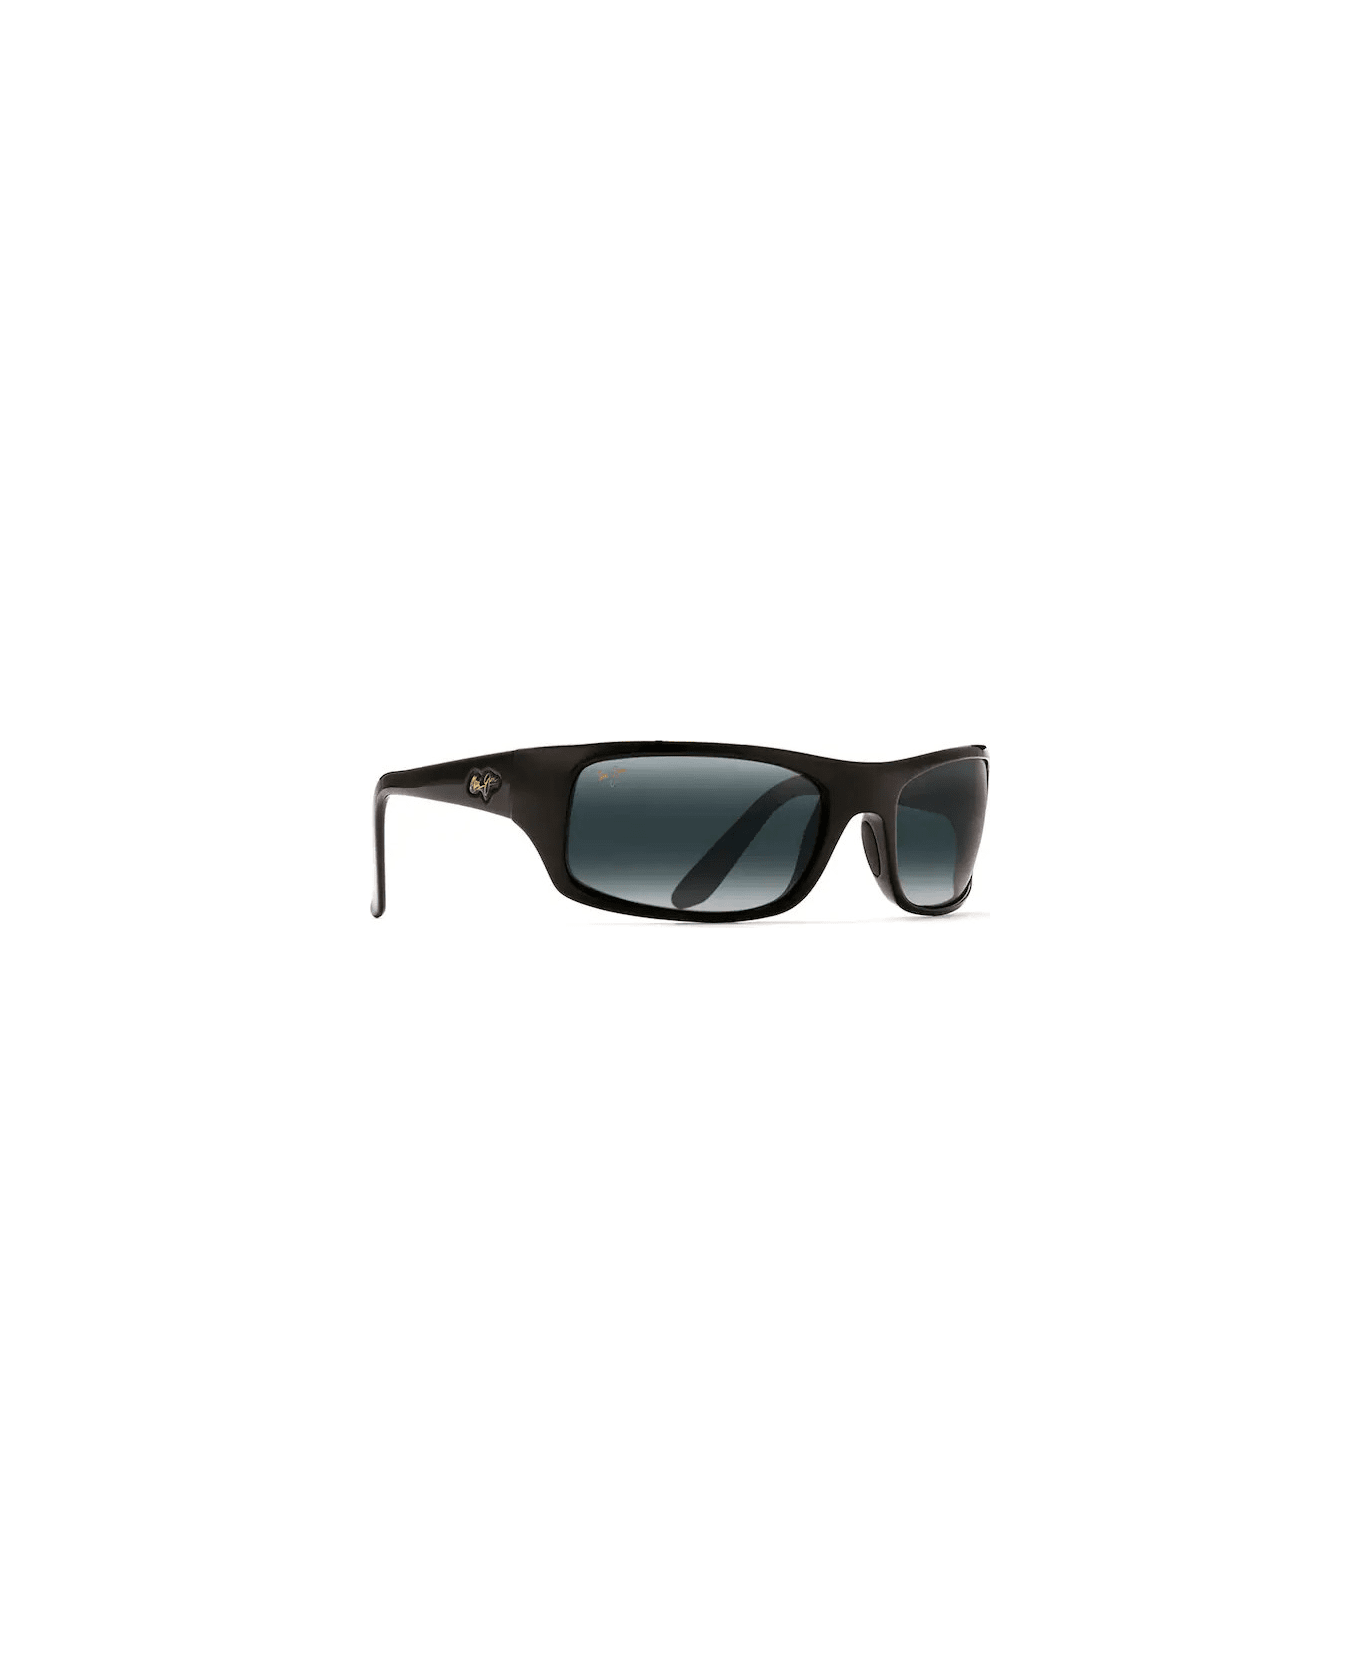 Maui Jim MJ202-02 Sunglasses